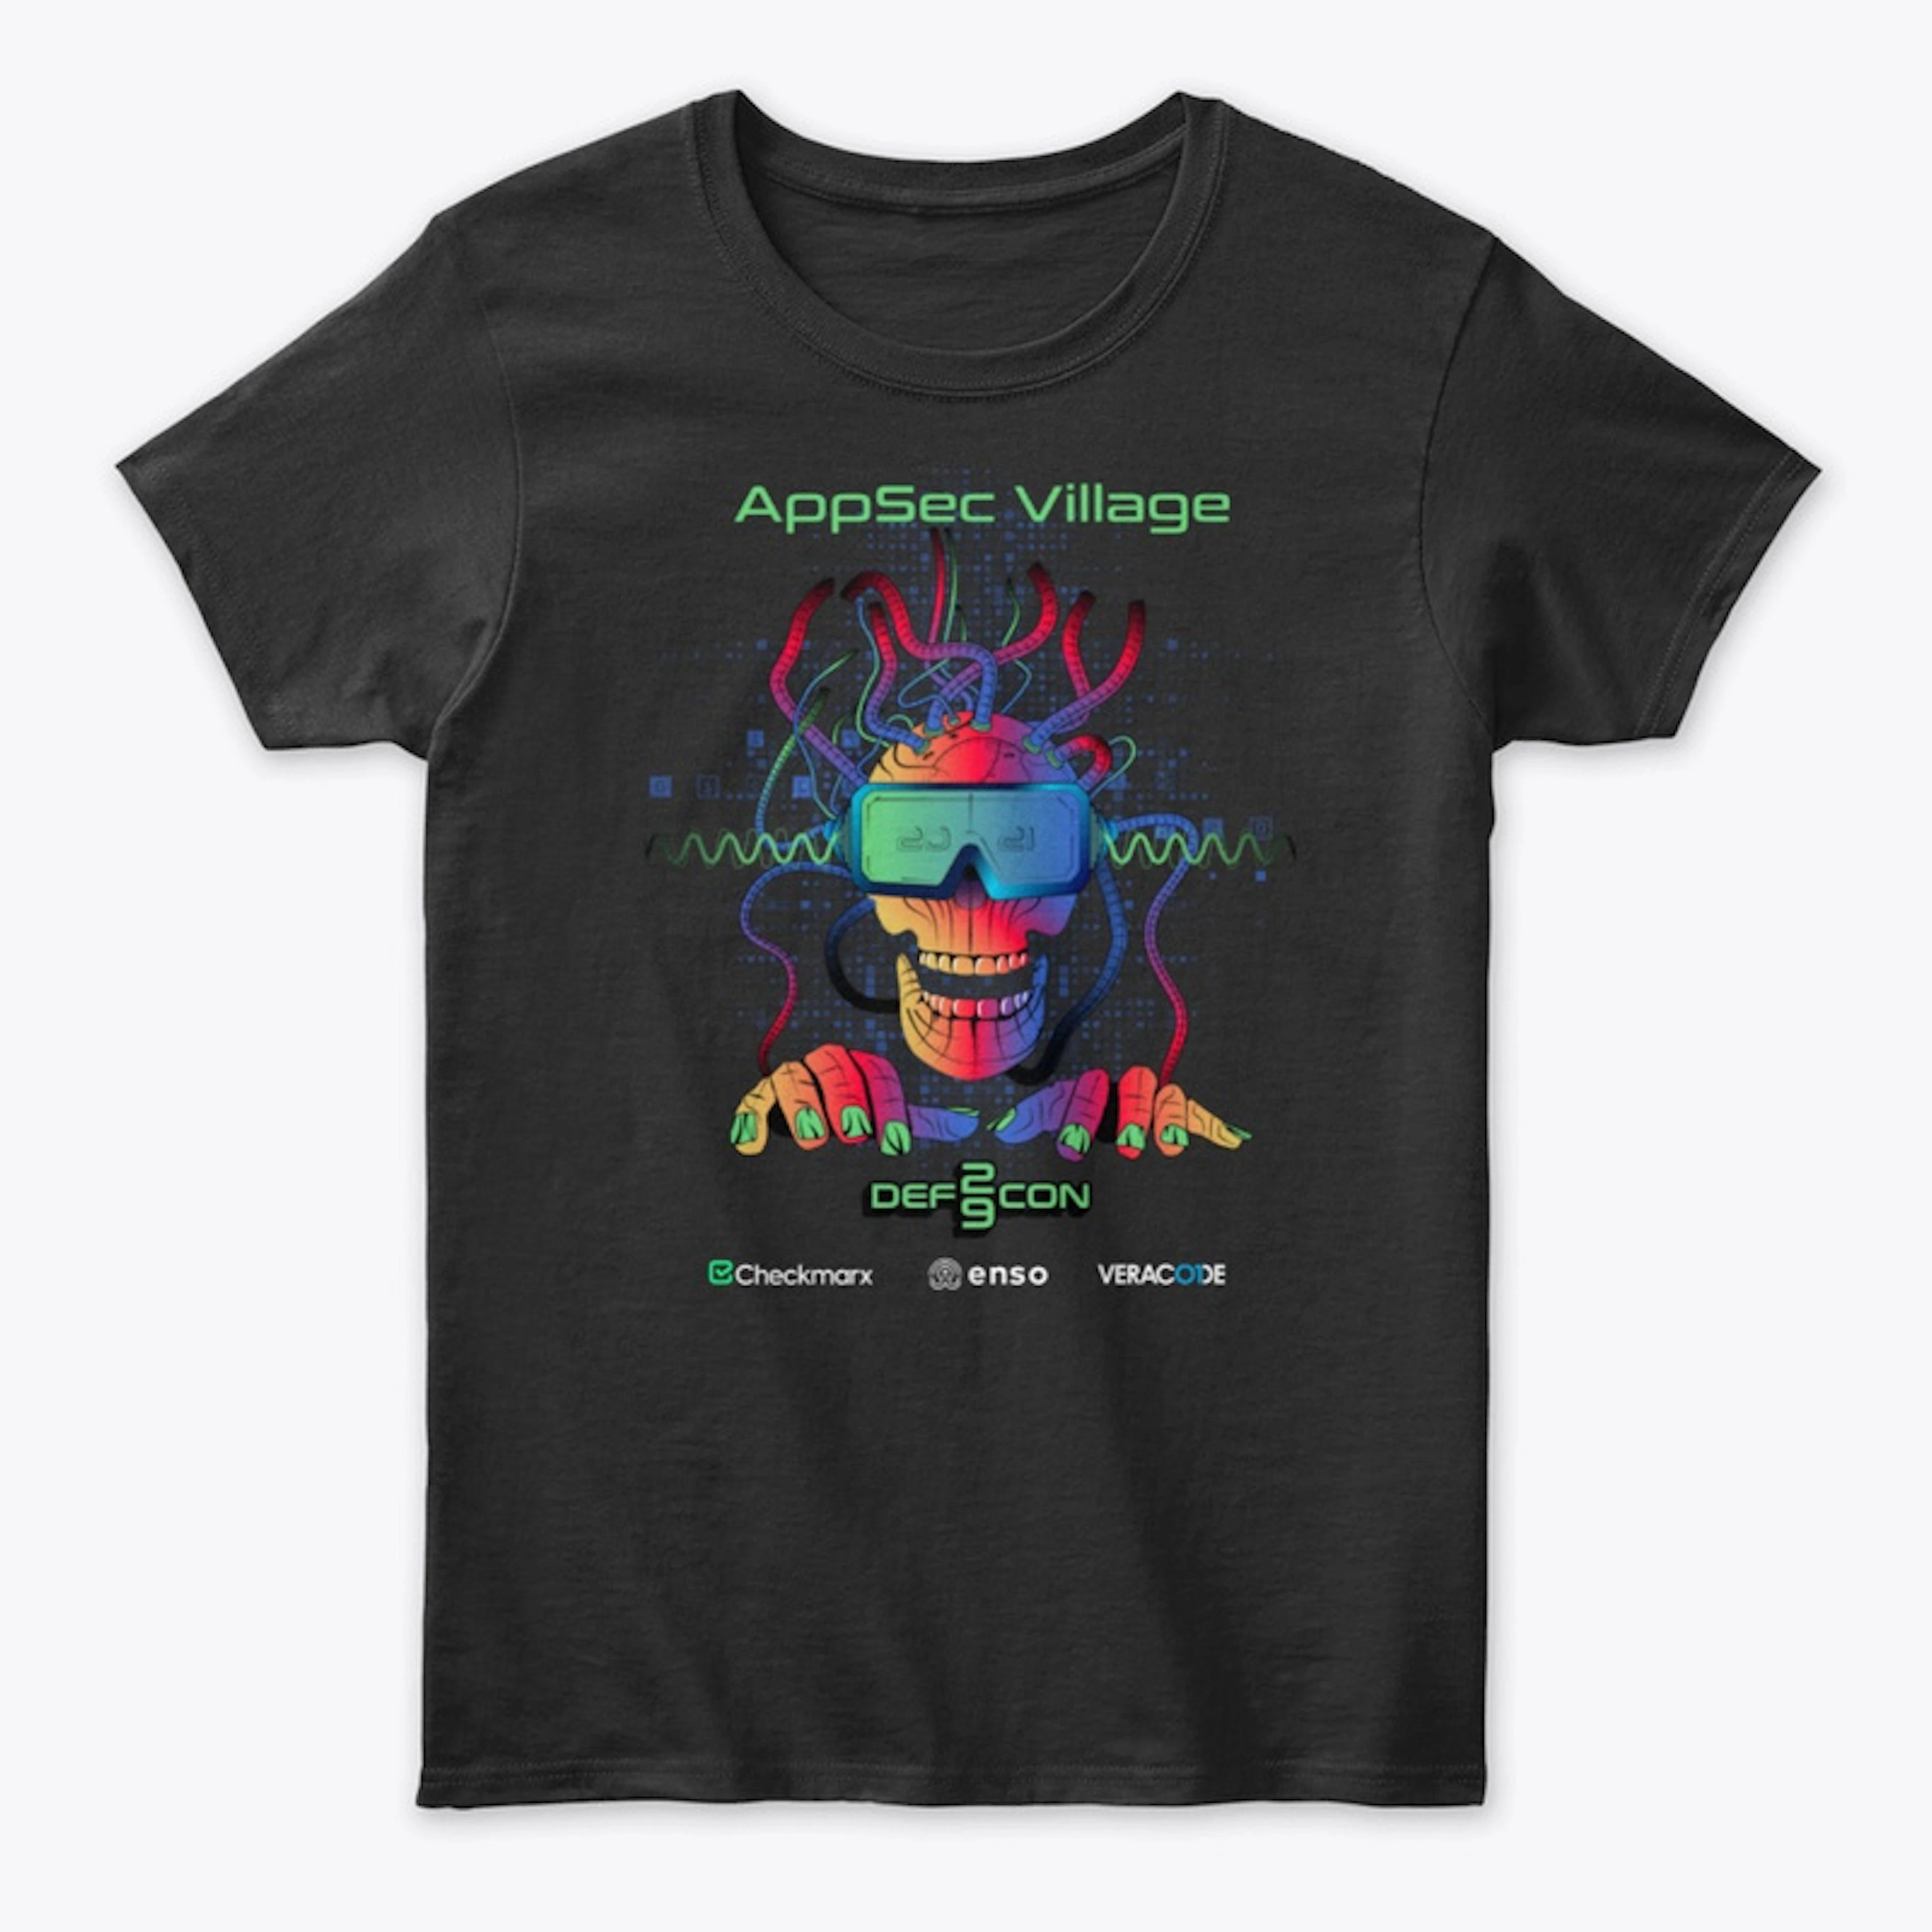 Ladies AppSec Villlage Shirt 2021